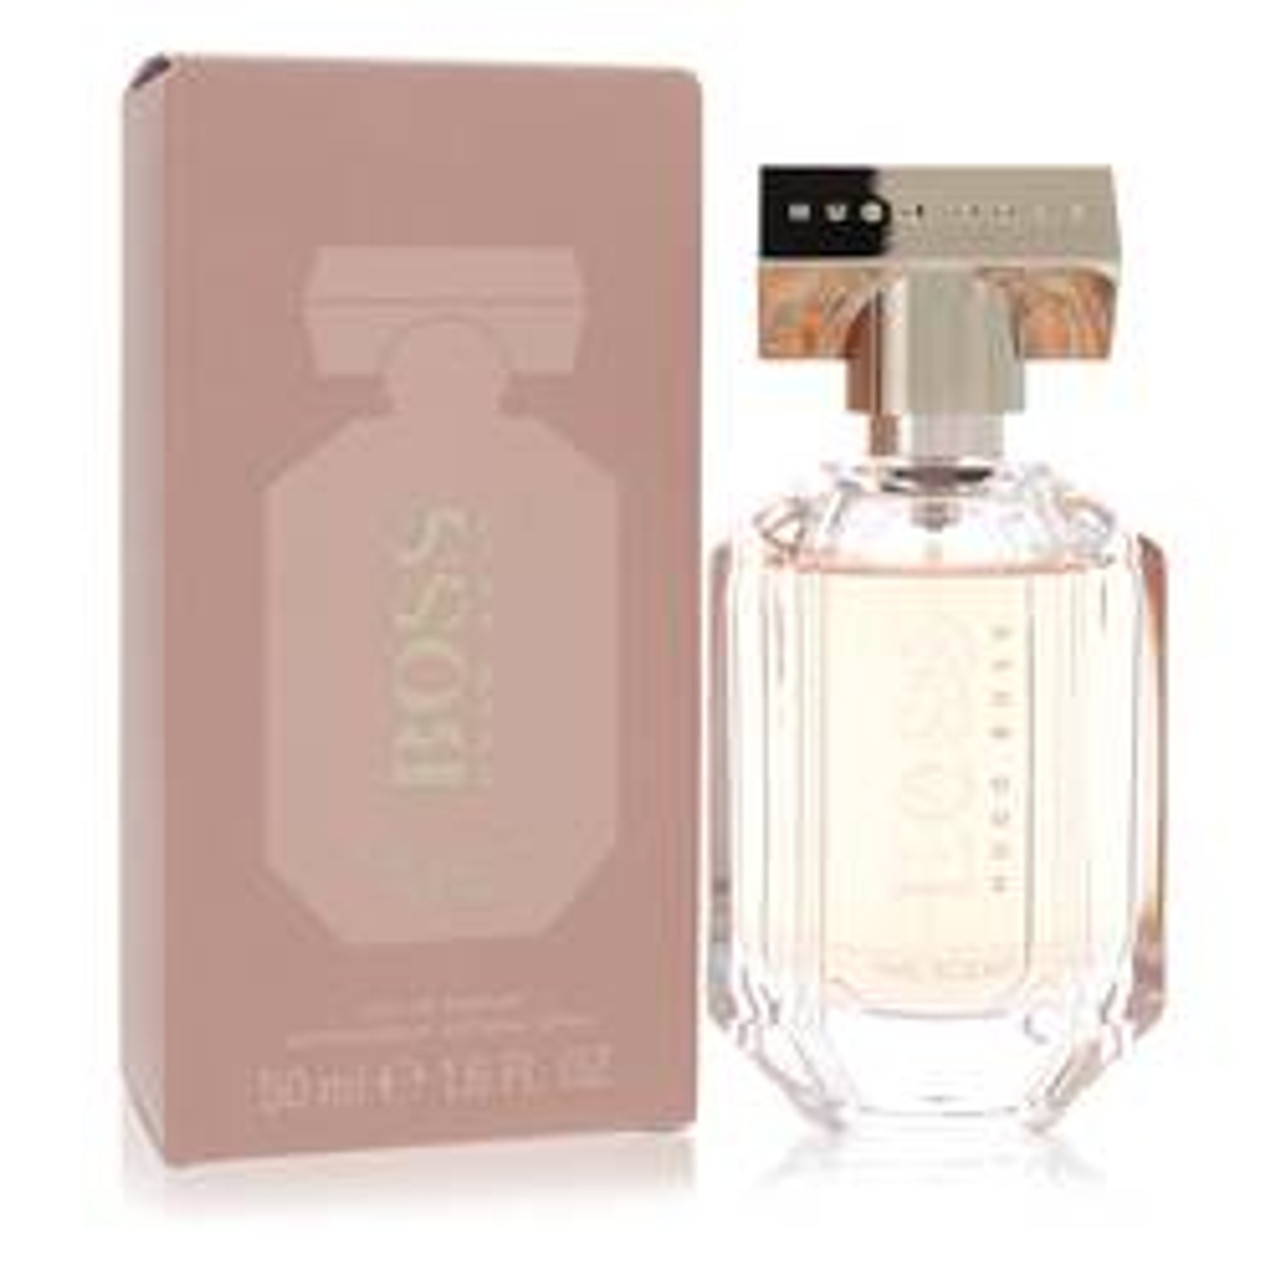 Boss The Scent Perfume By Hugo Boss Eau De Parfum Spray 1.7 oz for Women - *Pre-Order